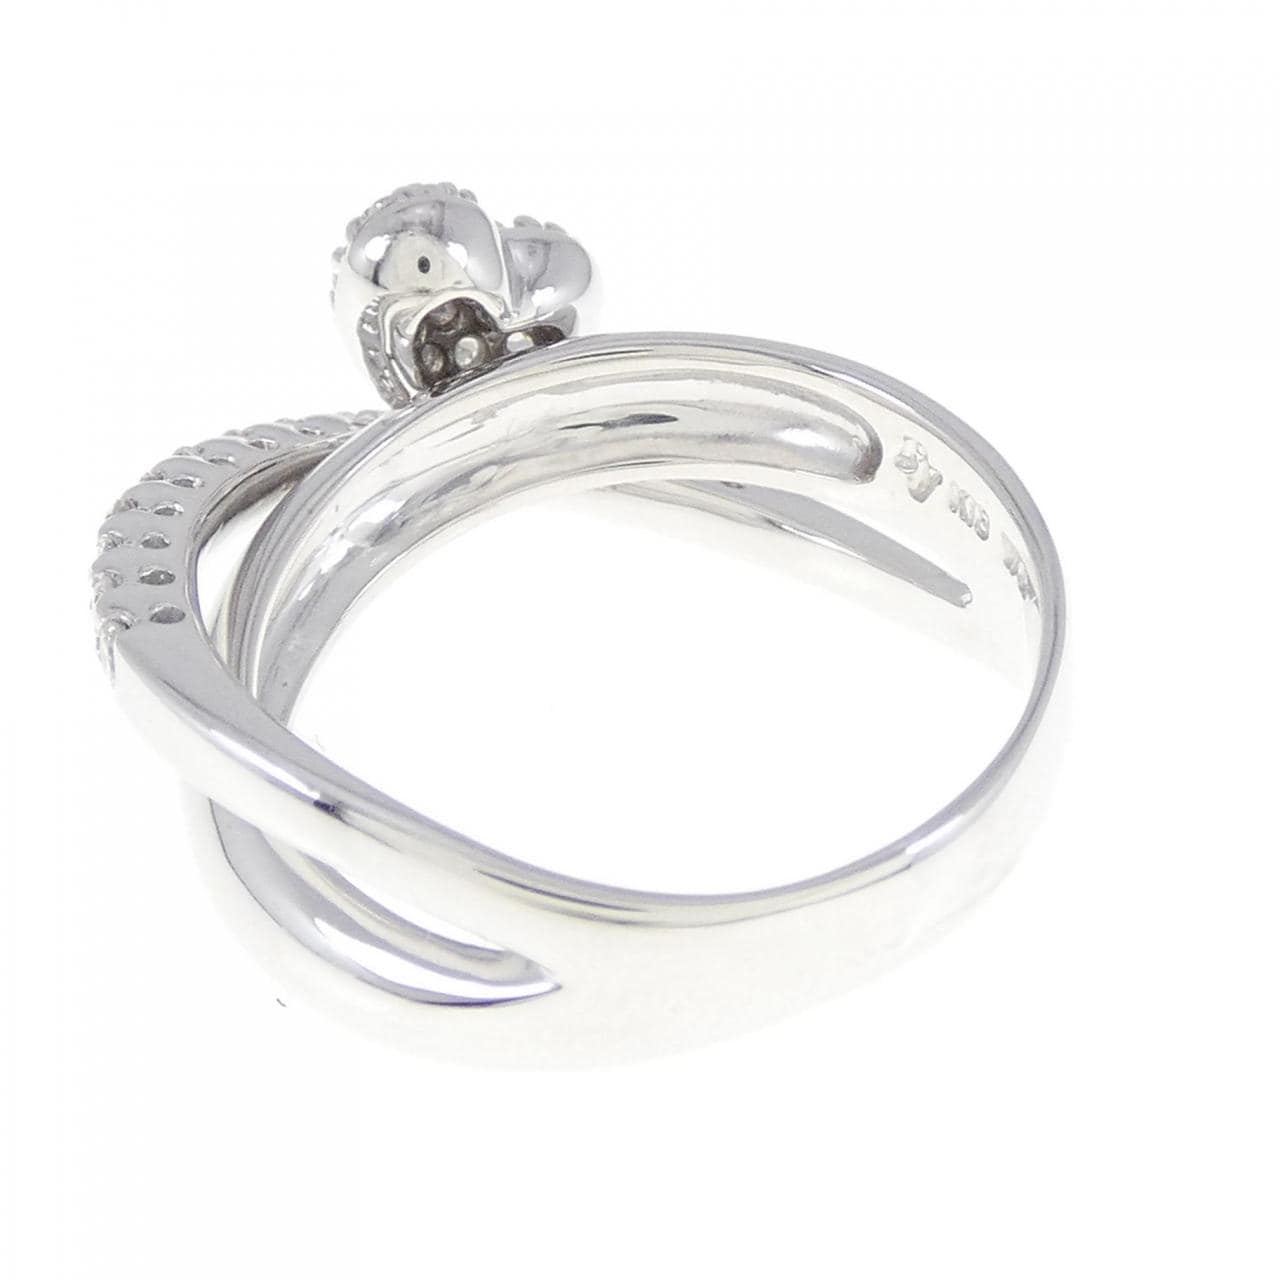 PONTE VECCHIO heart Diamond ring 0.40CT